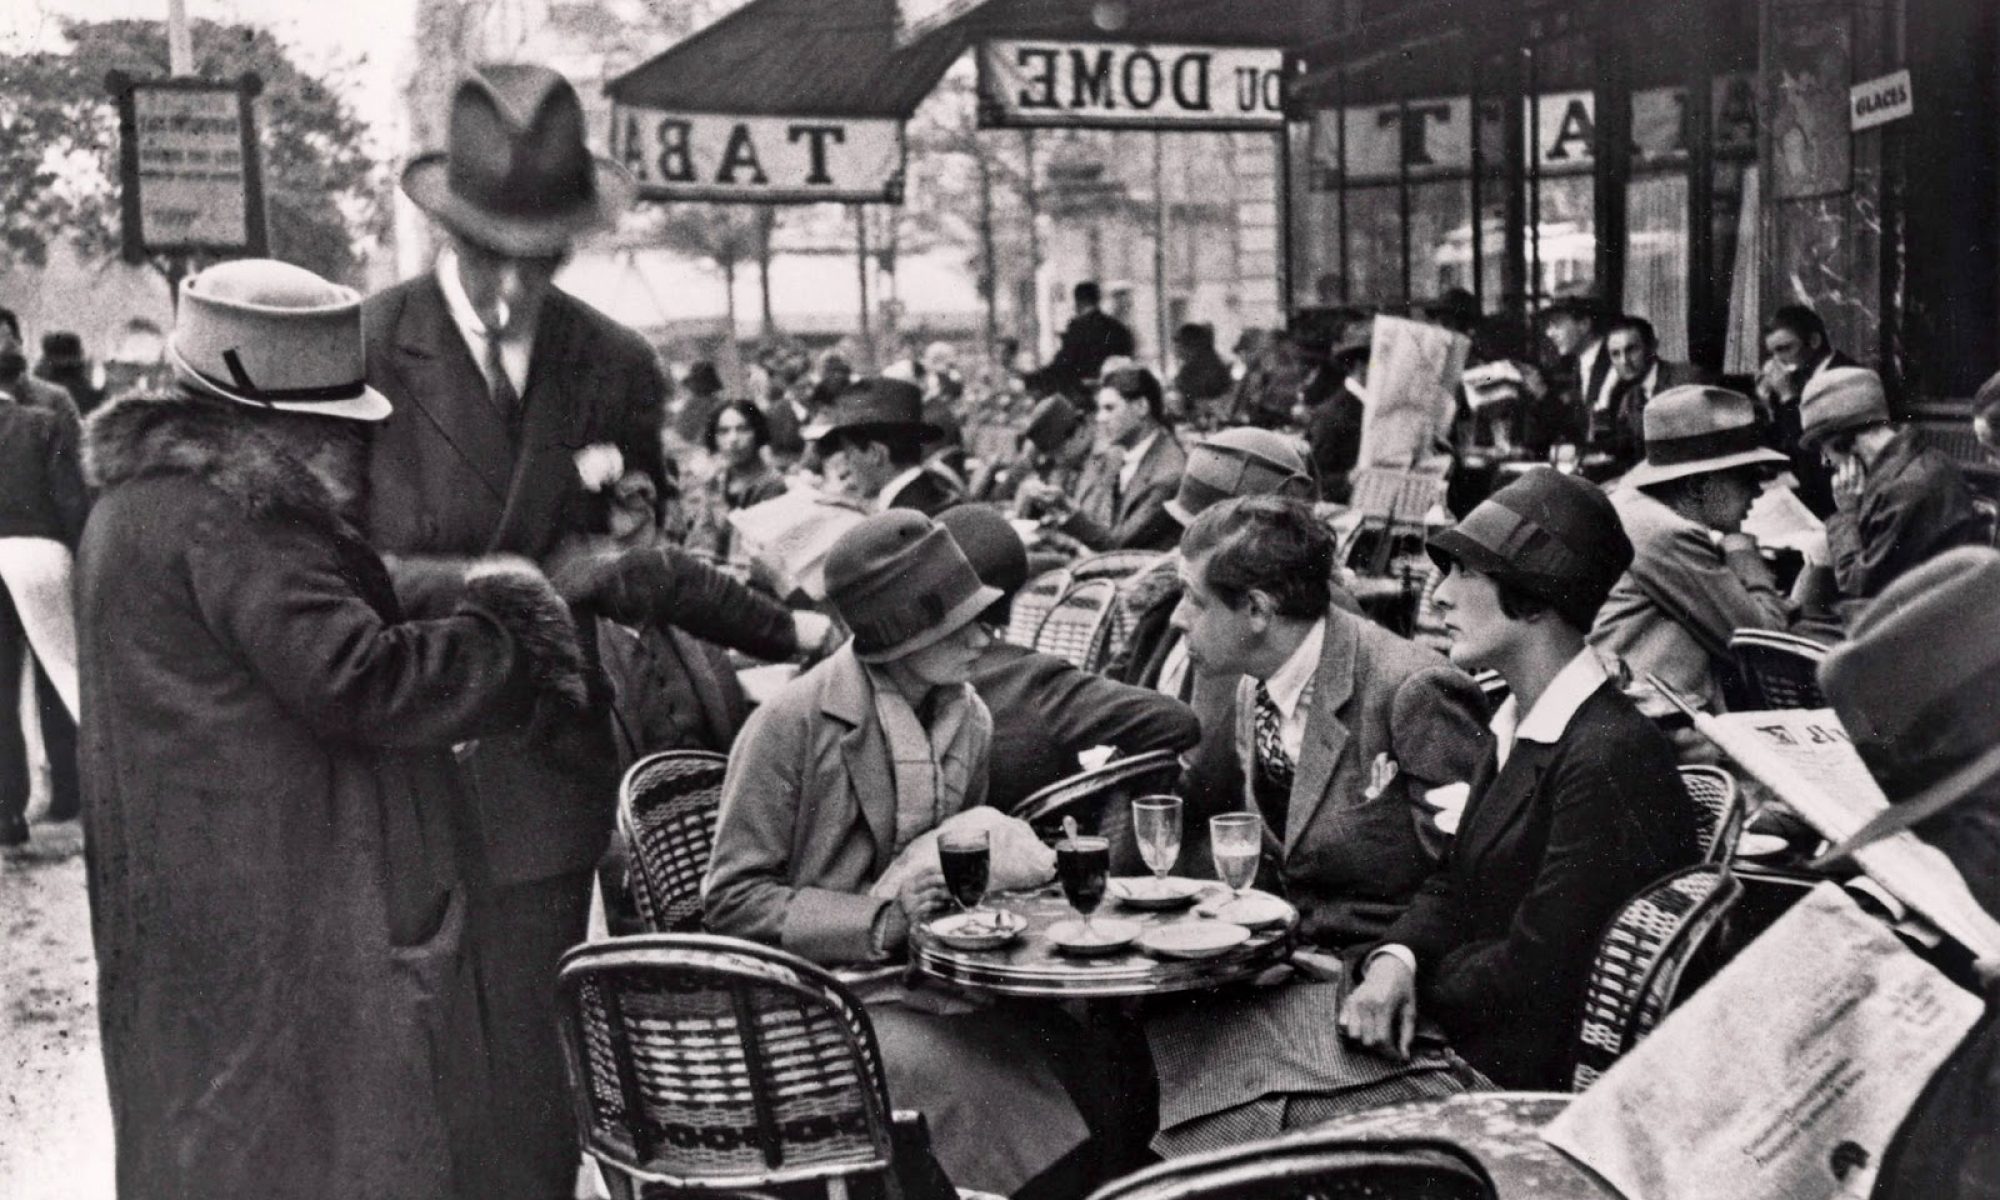 Эмиграция 1920 х годов. Париж 1930-е годы. Le Dome кафе Париж. Париж в 30-е годы. Кафе Парижа в 30-е годы.